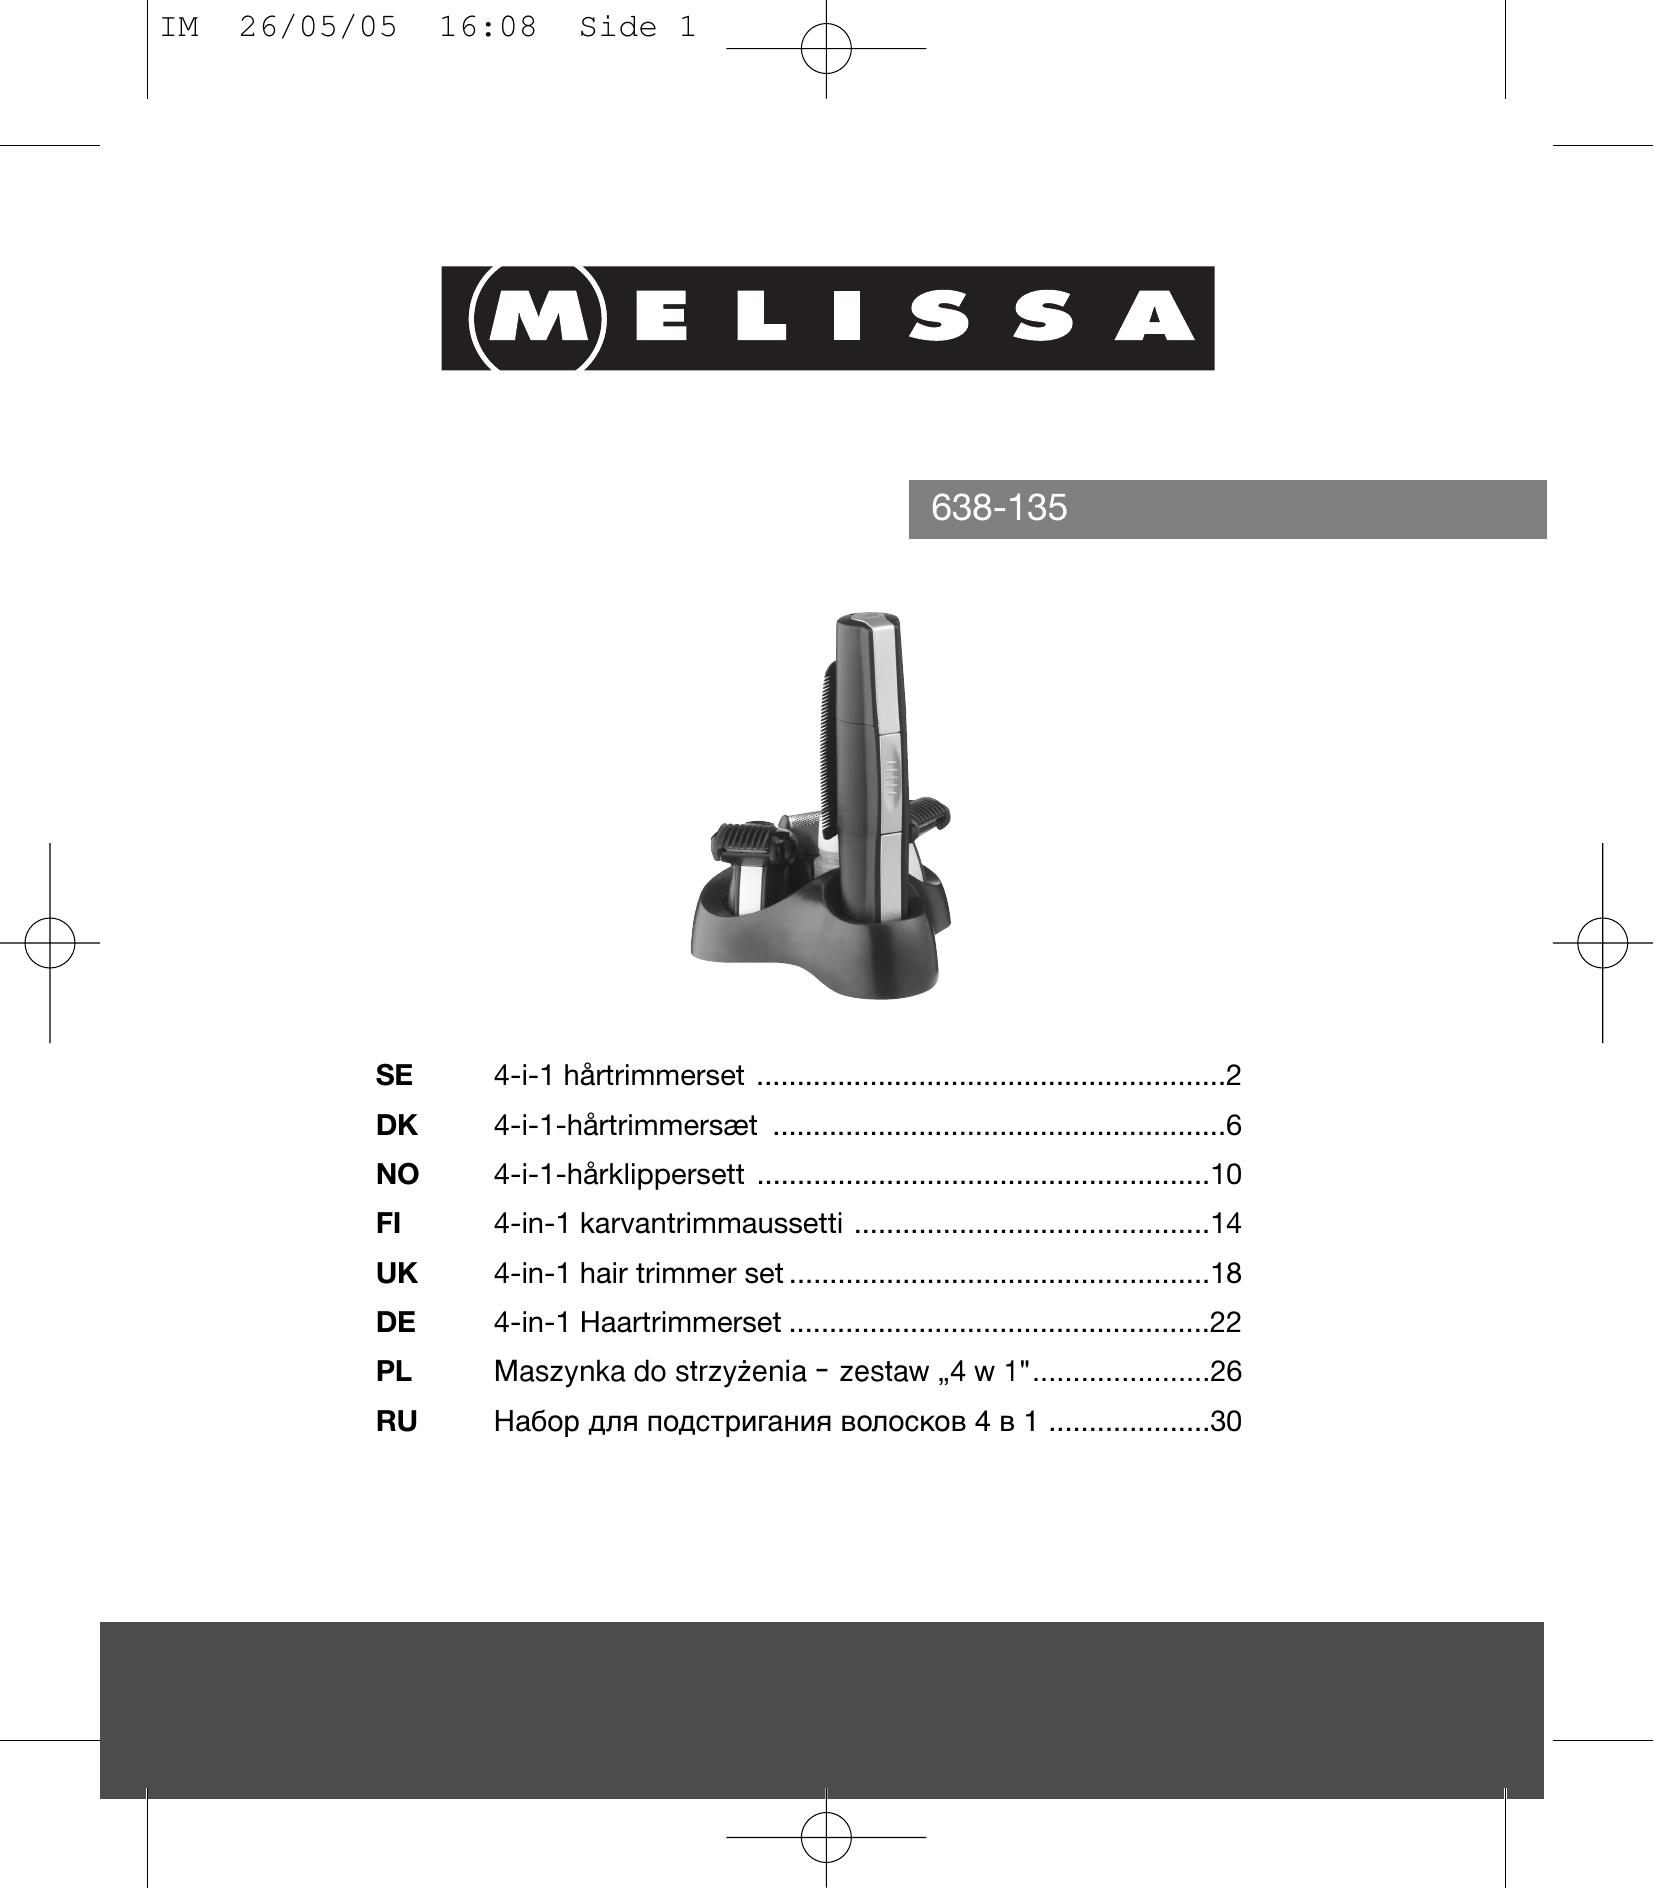 Melissa 638-135 Skin Care Product User Manual